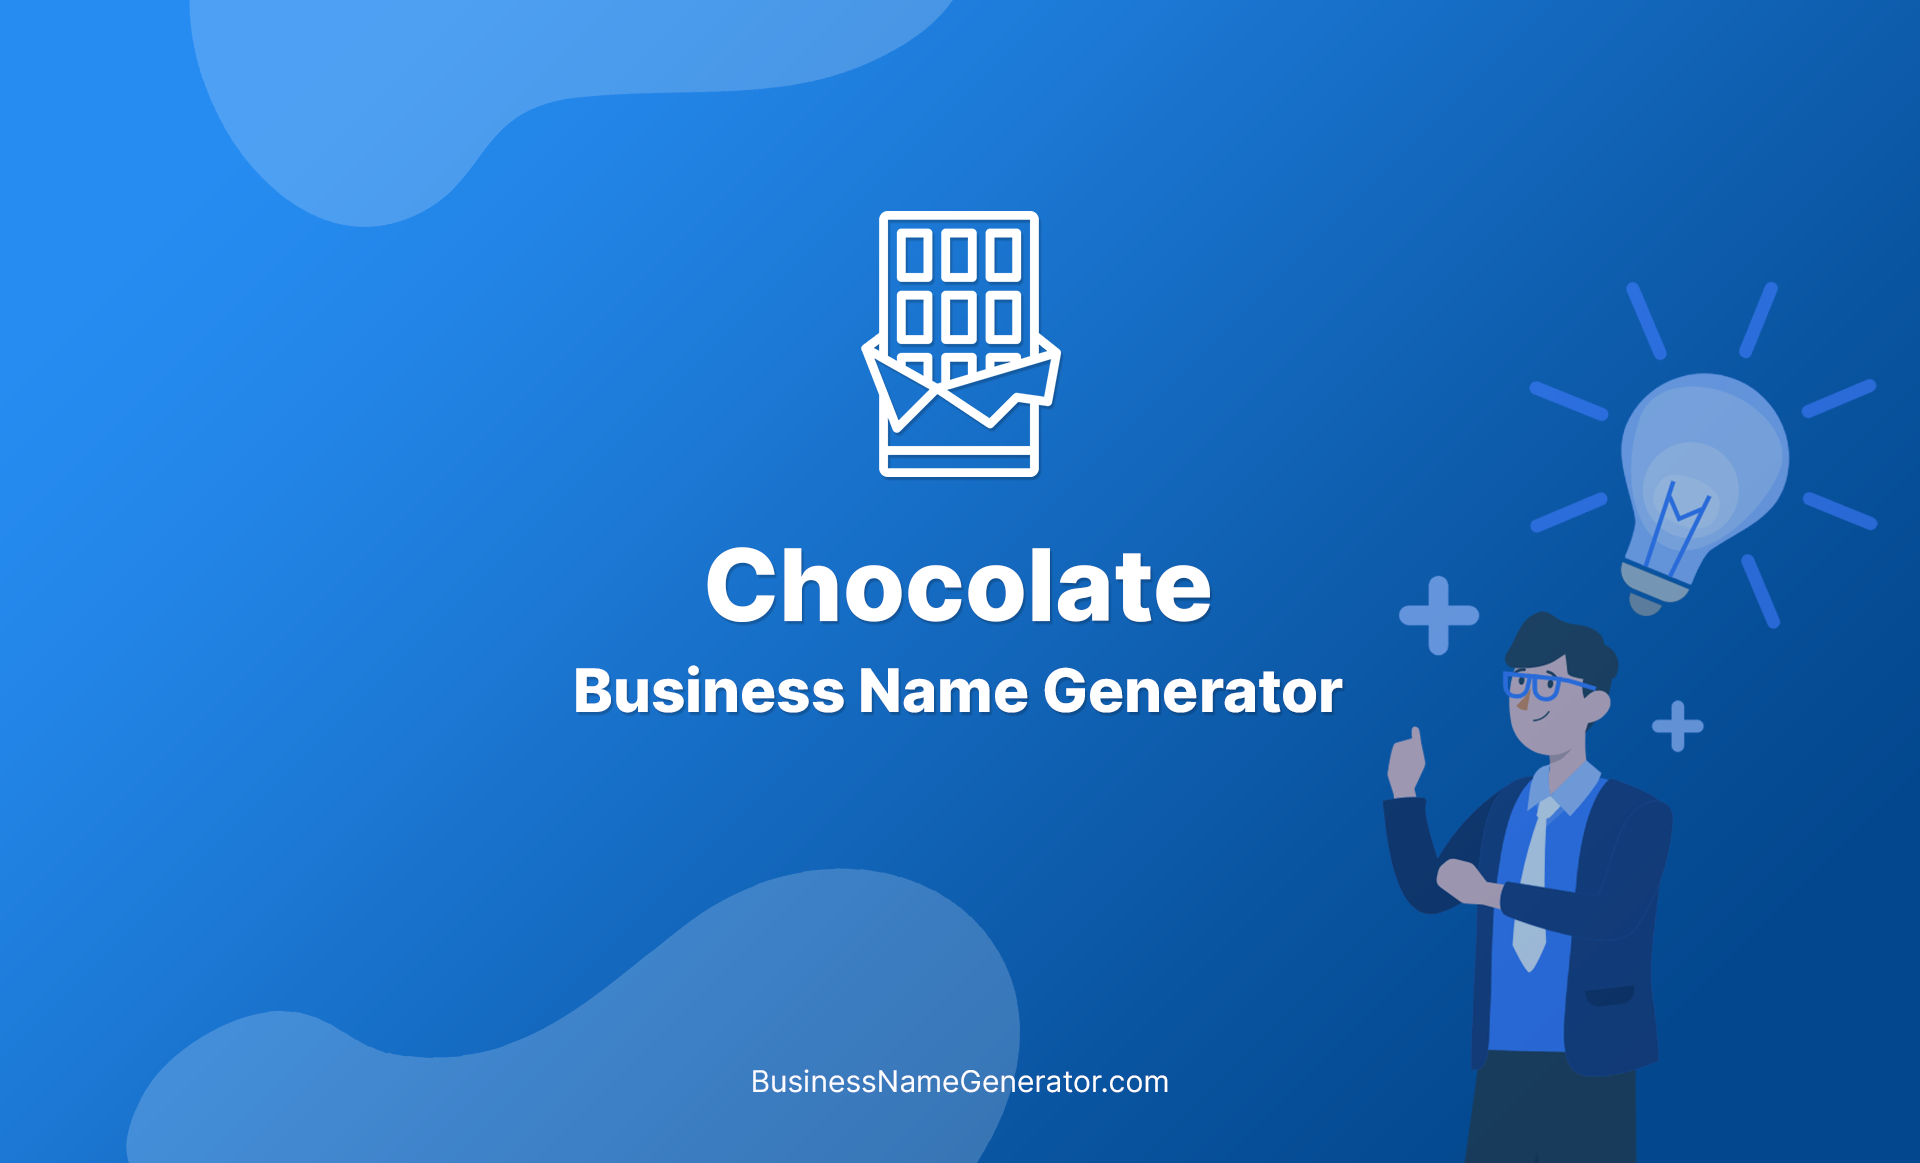 Chocolate Business Name Generator